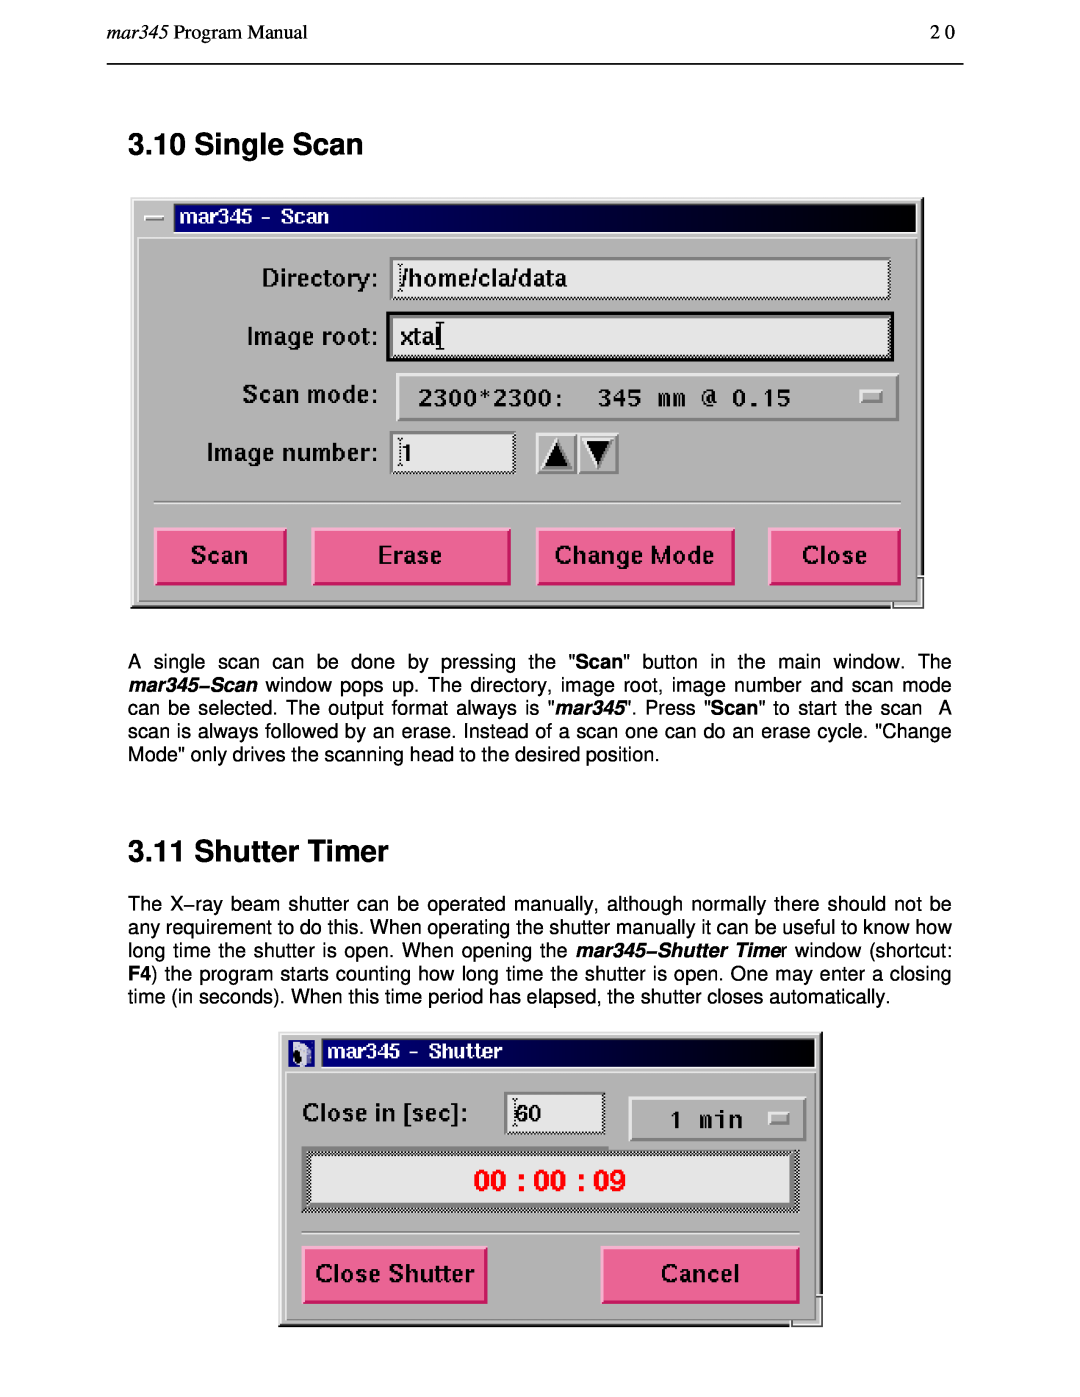 Compaq manual Single Scan, Shutter Timer, mar345 Program Manual 